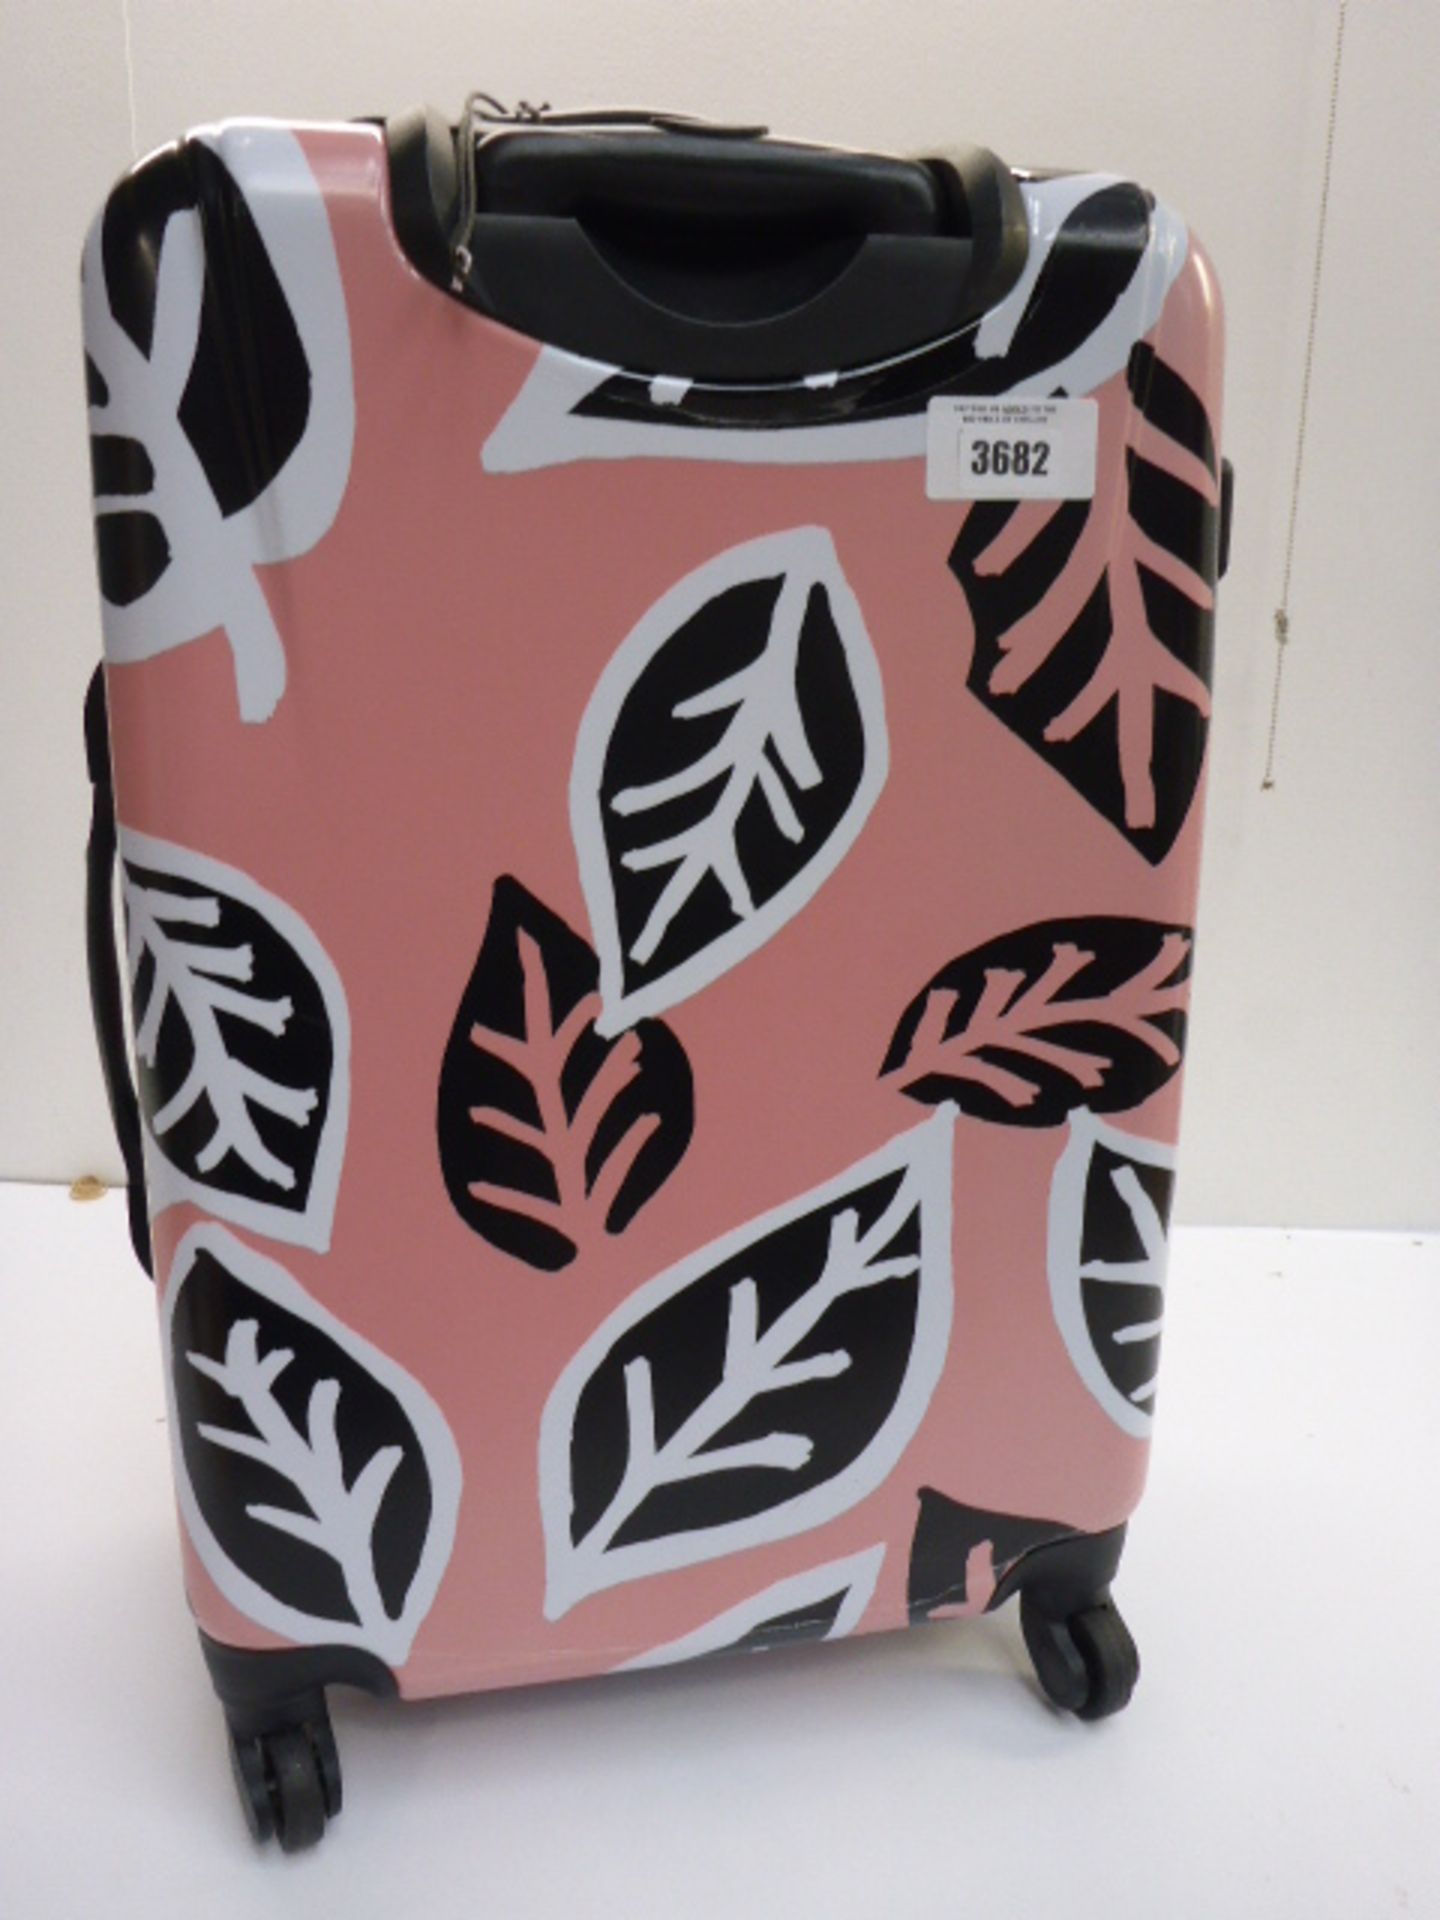 Tripp 4 wheel pink and leaf design suitcase